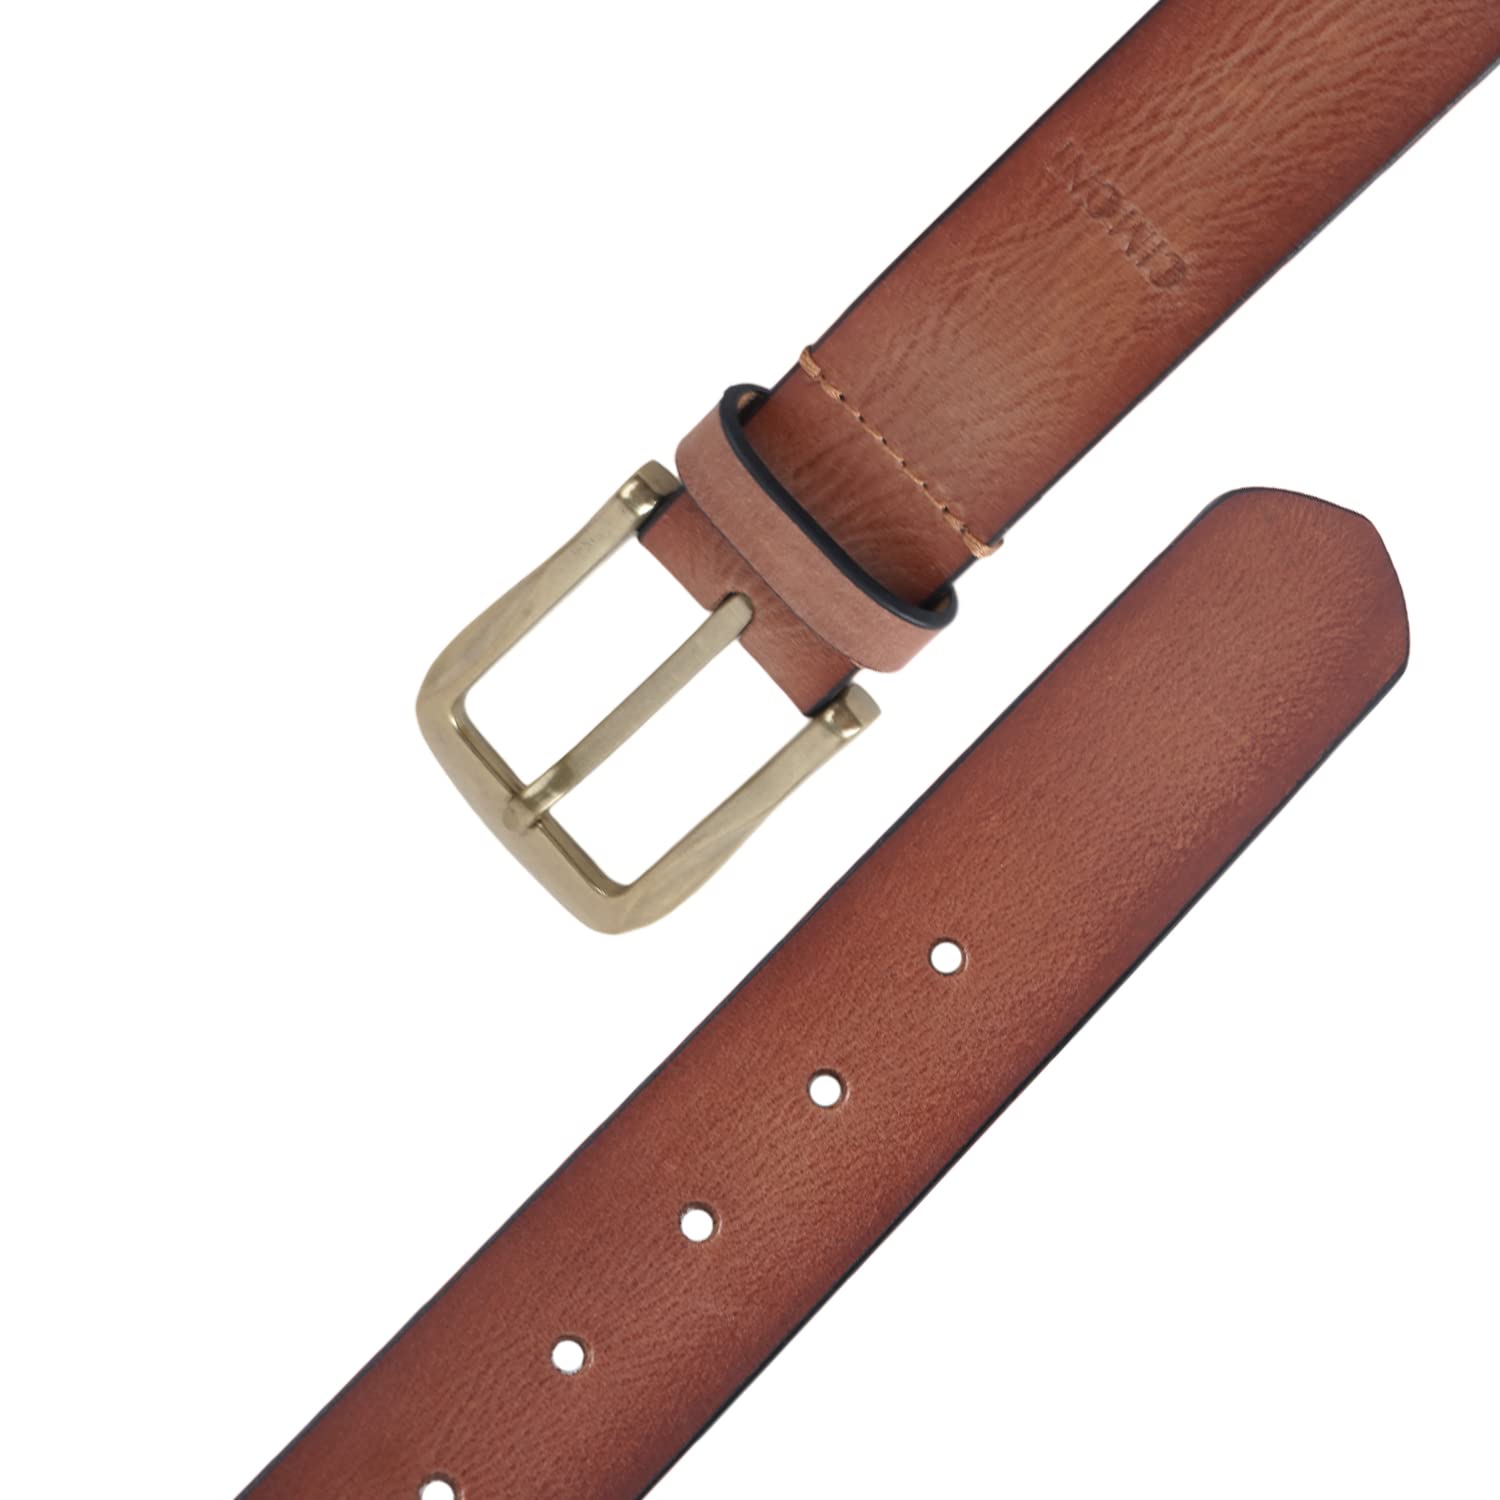 CIMONI Genuine Leather Classic Tan Casual Formal Dailyuse Belt For Men ( 1 Year Gurantee)